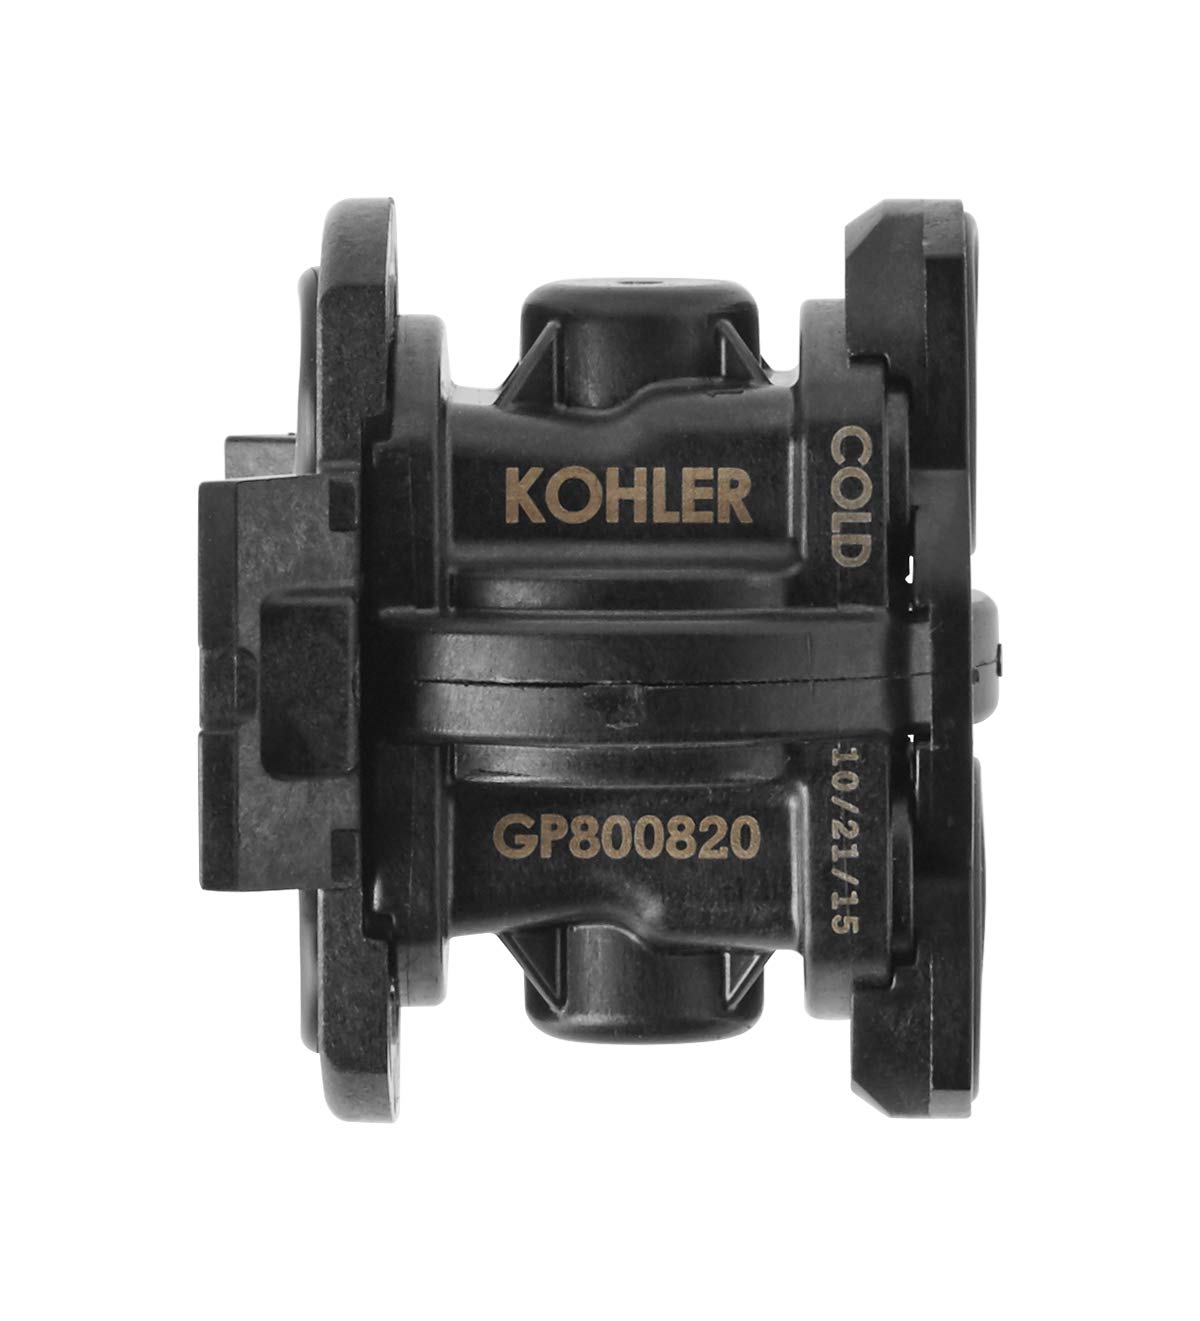 Kohler GP800820 Rite-Temp Pressure-Balancing Unit Cartridge